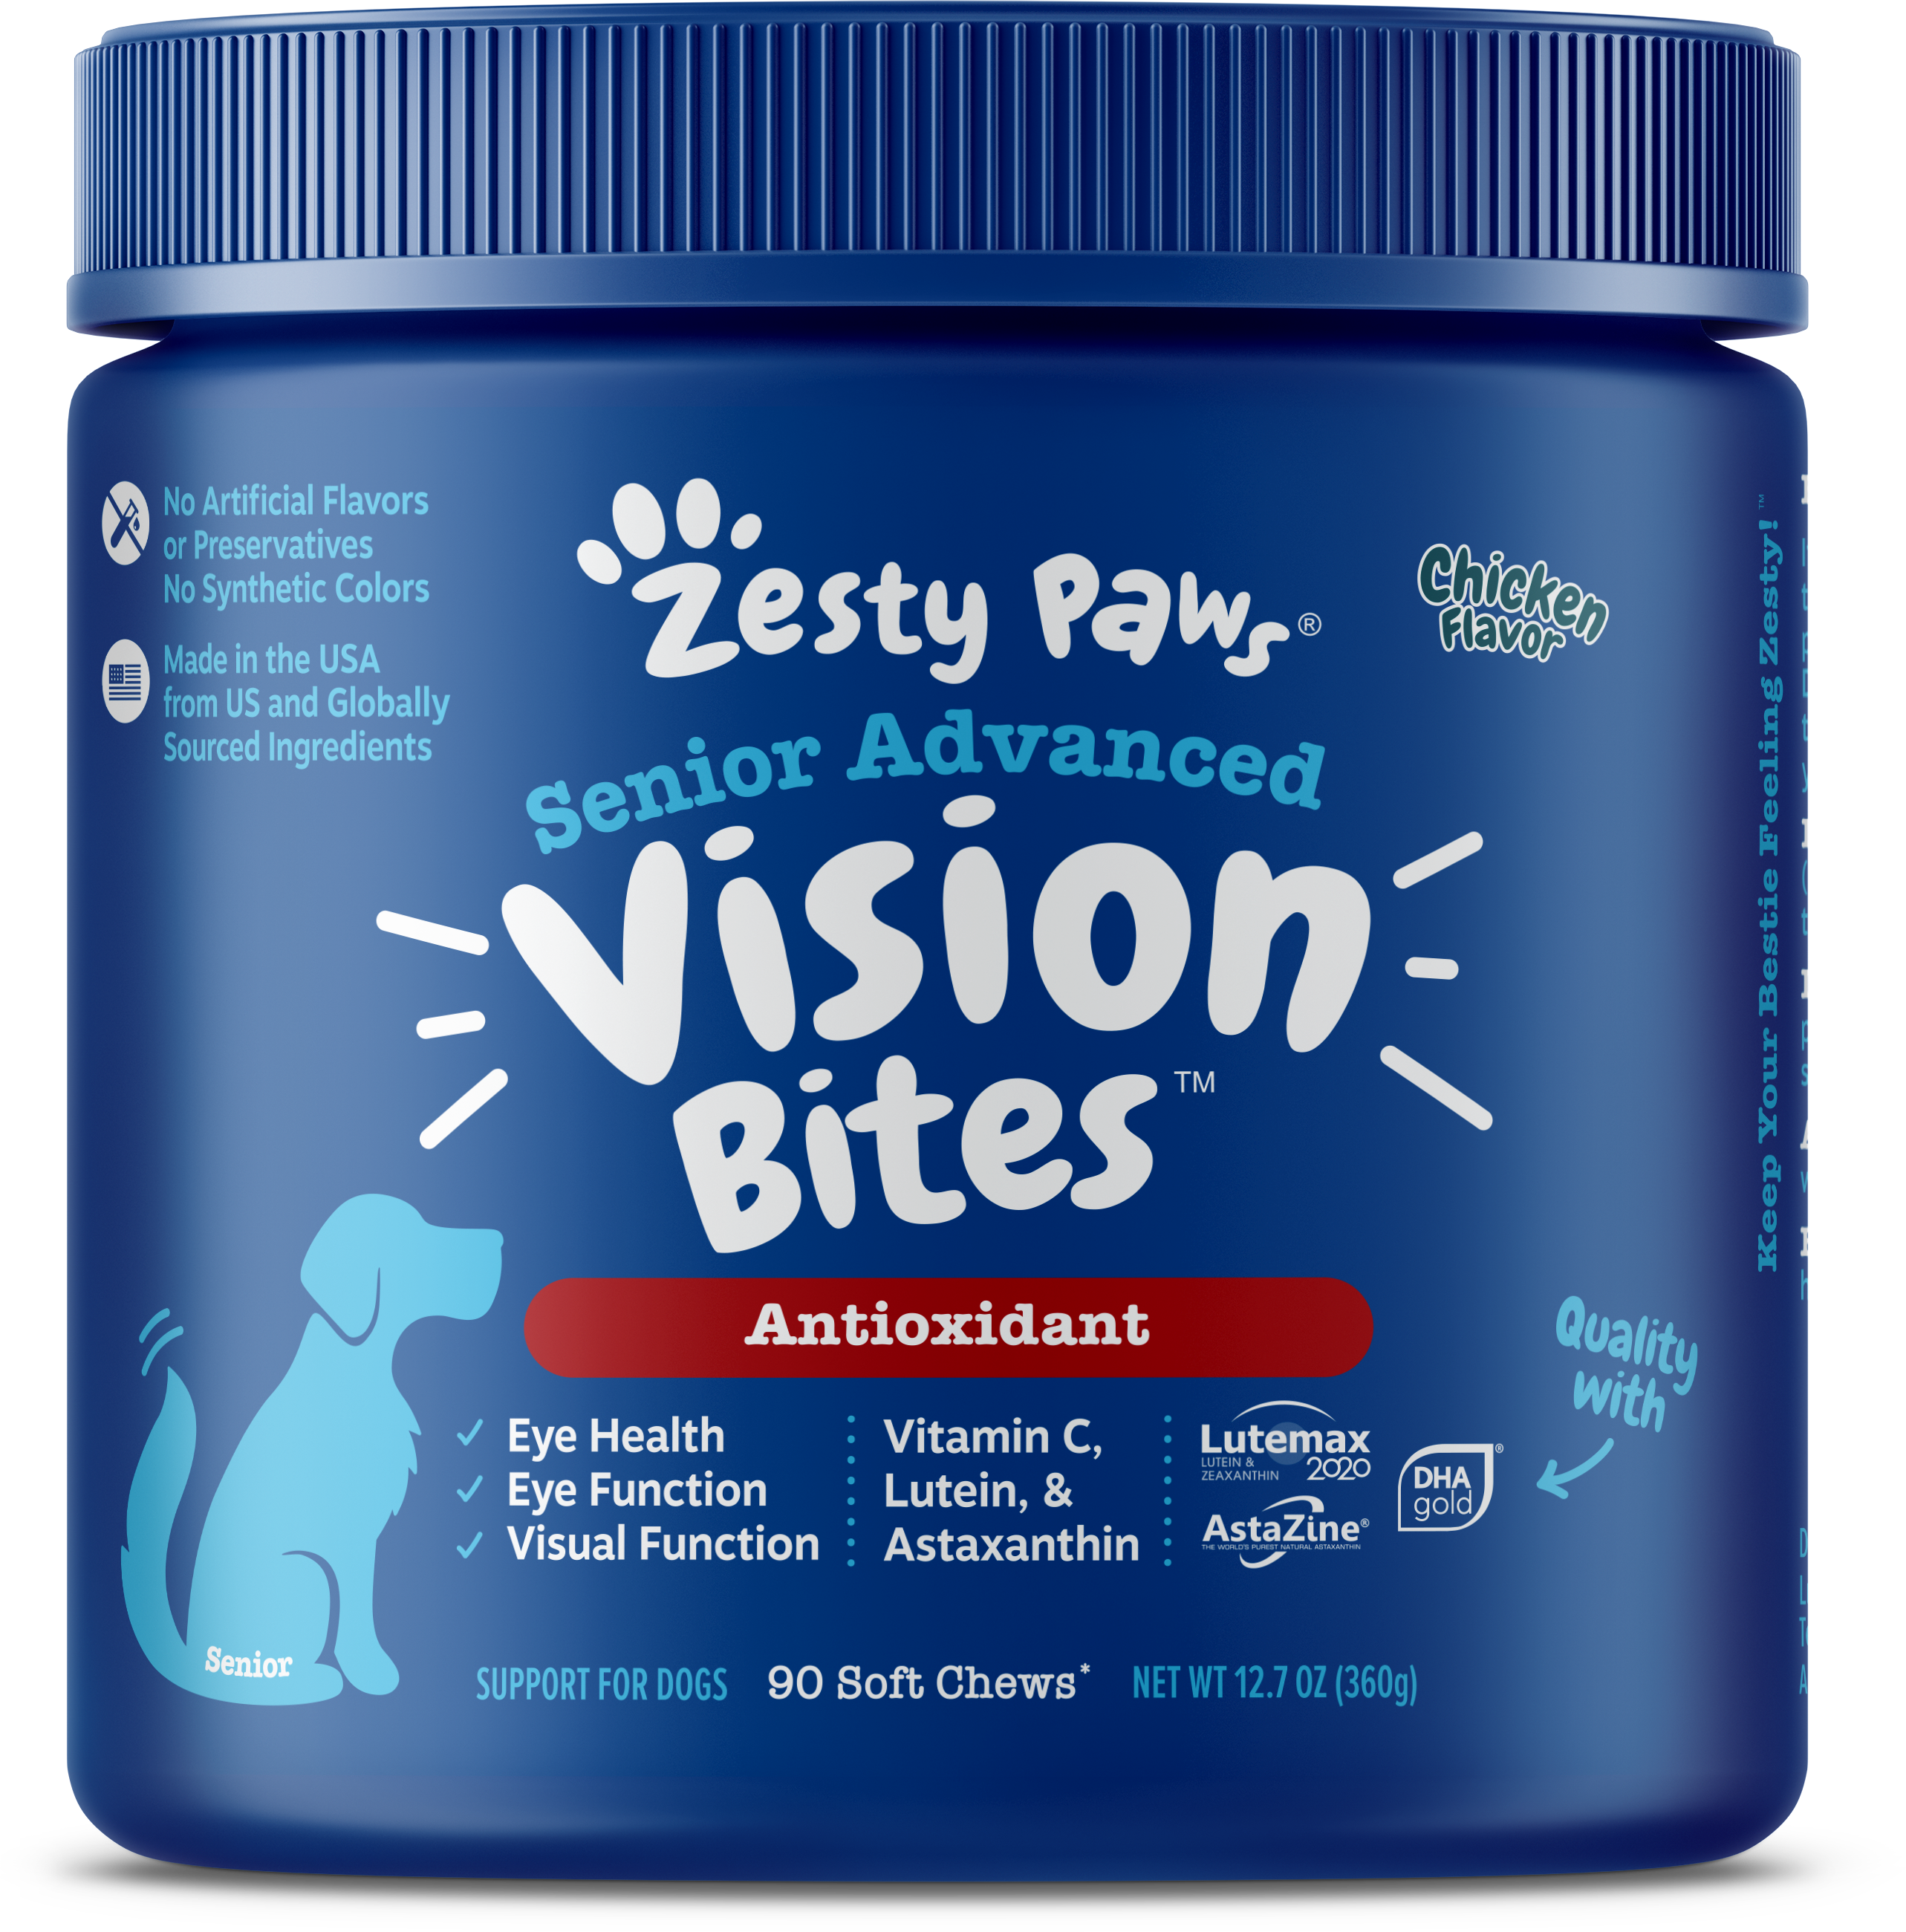 Everyday Health Bundle 11-in-1 Bites + Vision Bites™  for Senior Dogs